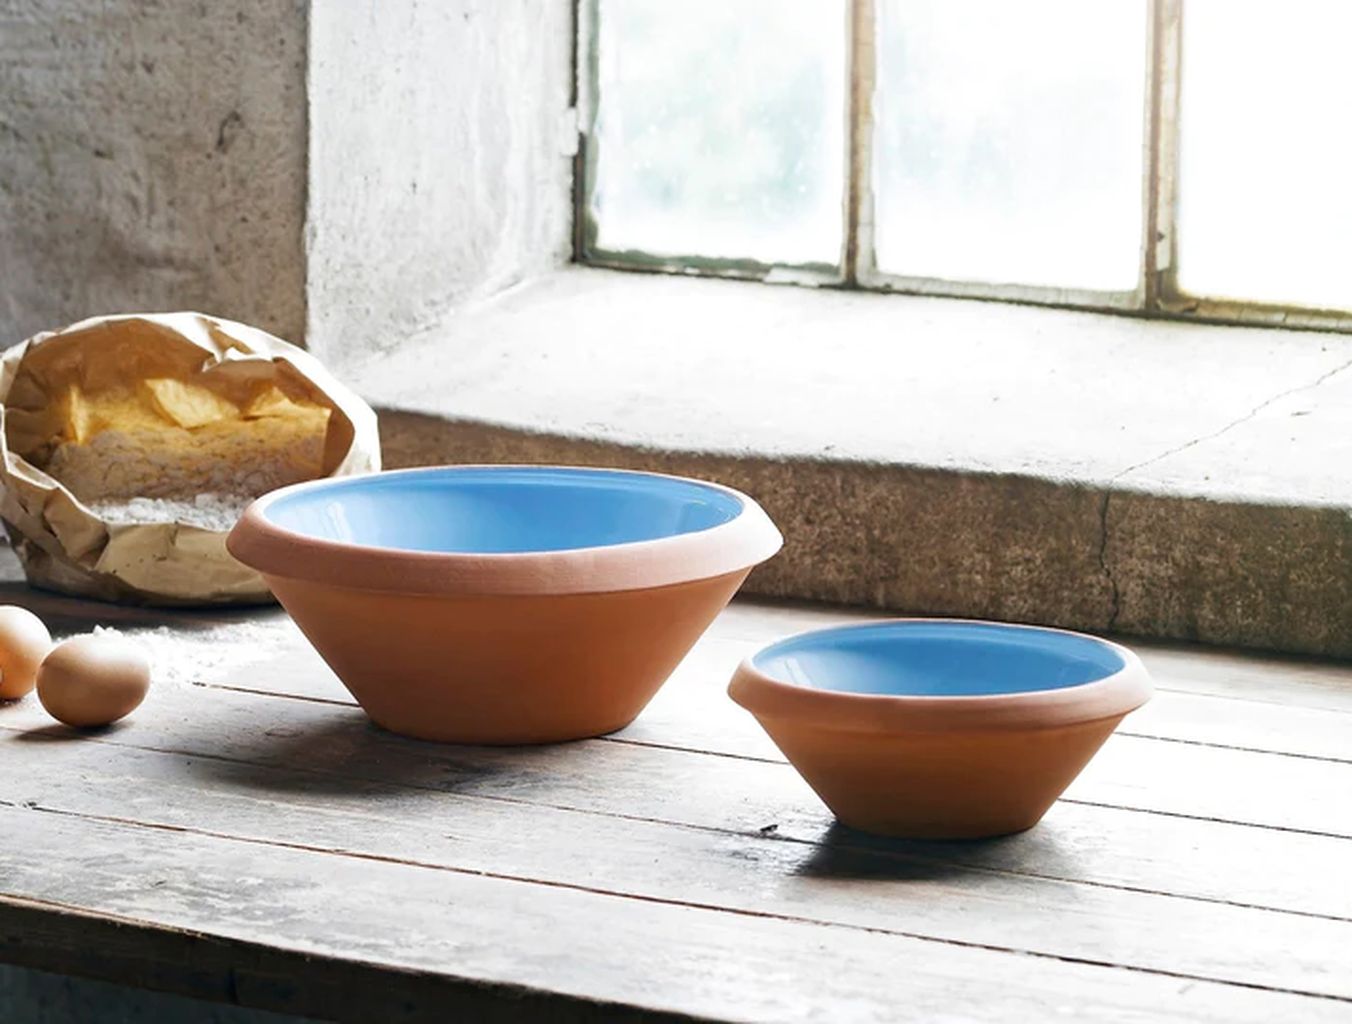 Knabstrup Keramik Dough Bowl 0,1 L, Light Blue